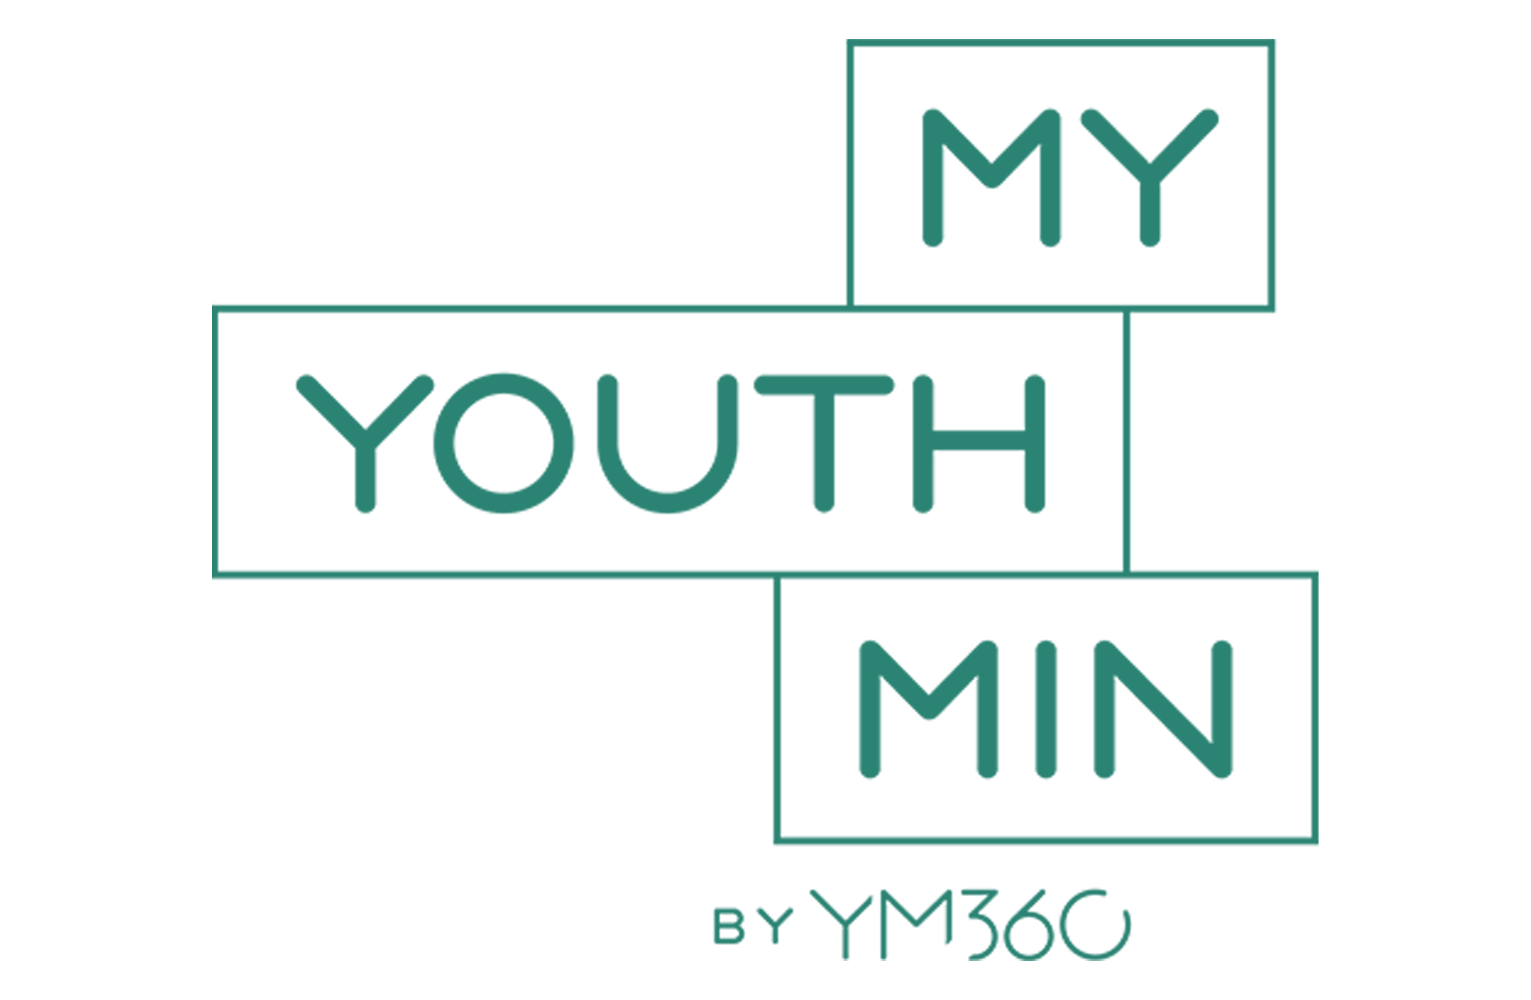 MyYouthMin Membership